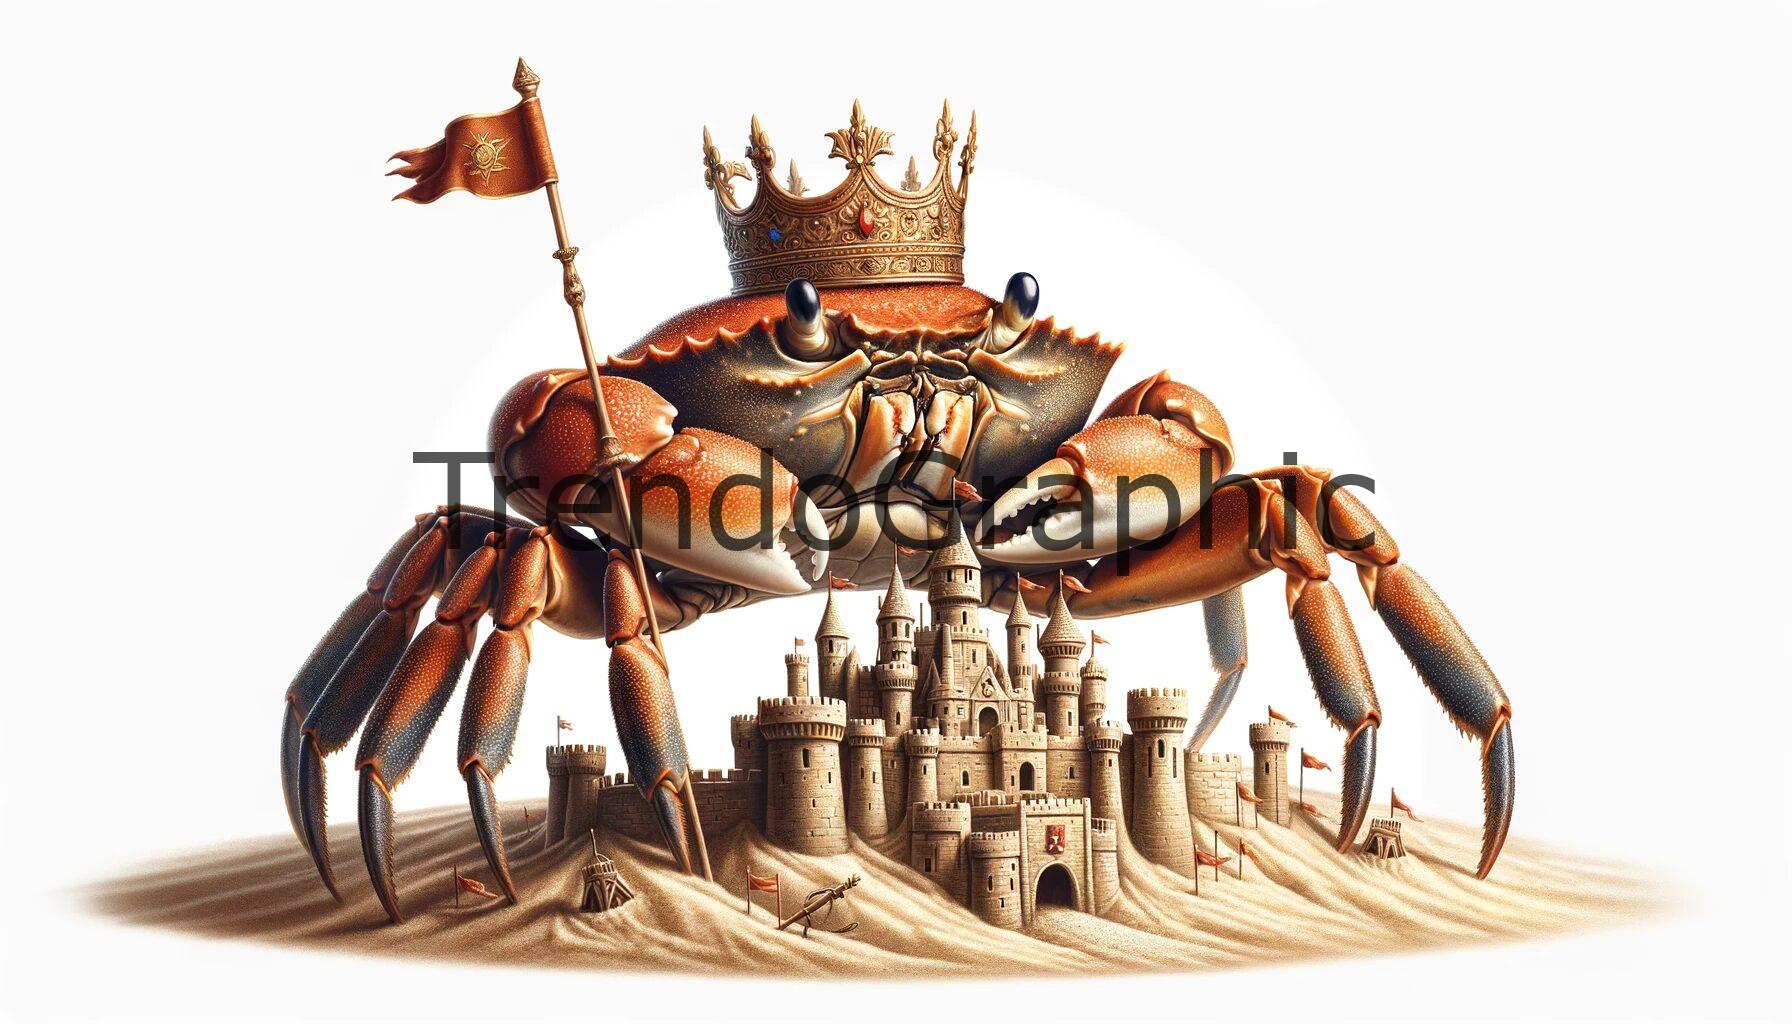 Regal Crab’s Sandcastle Kingdom